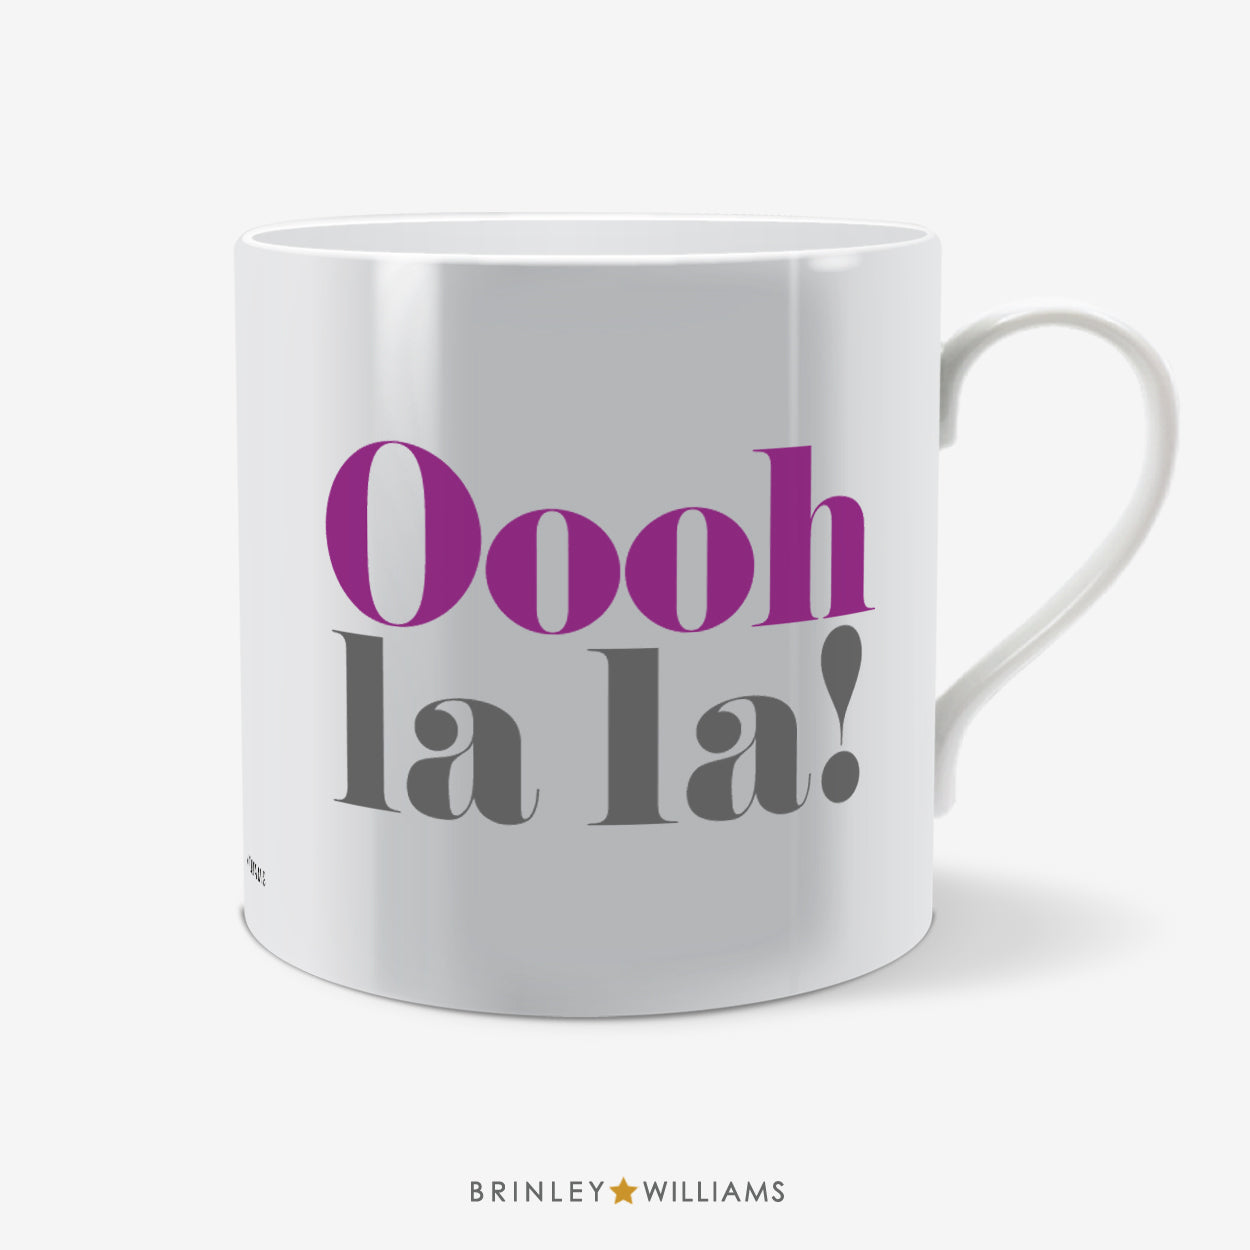 Oooh la la! Fun Mug - Purple